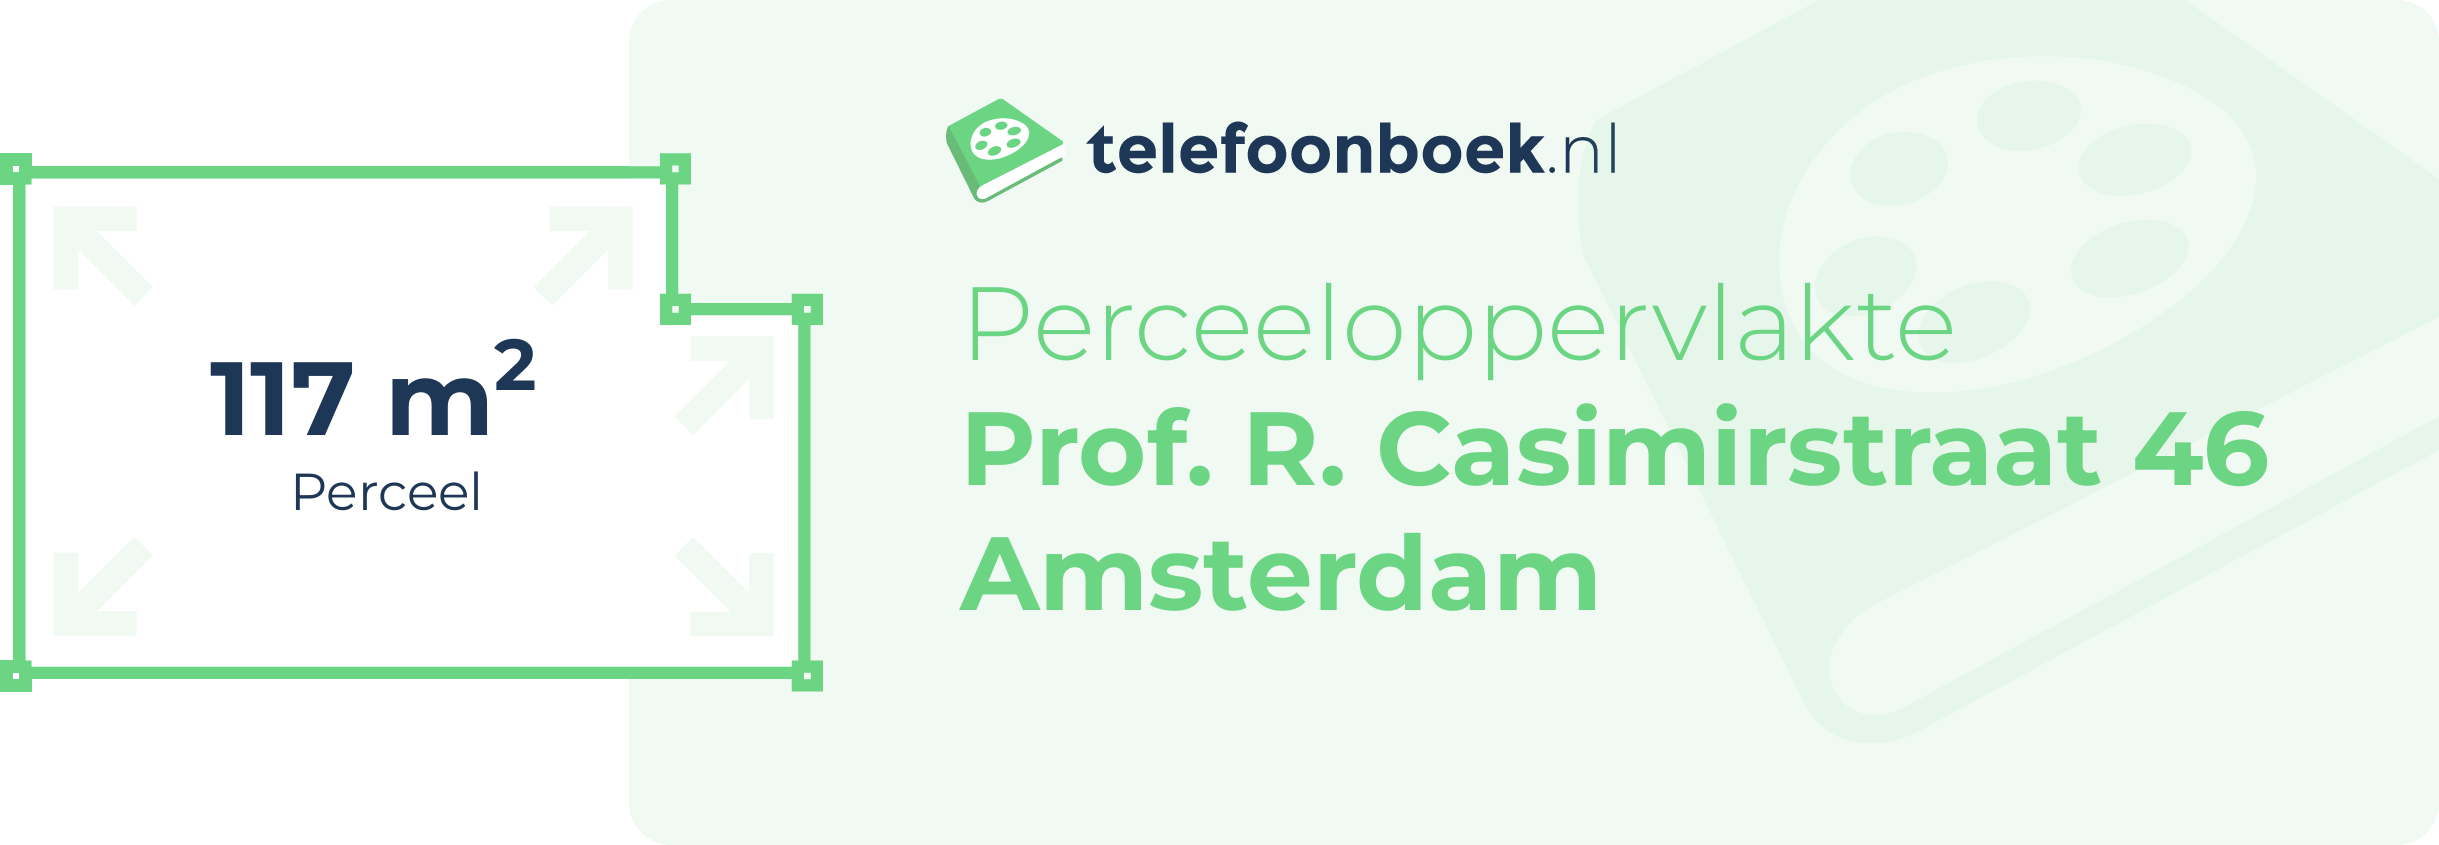 Perceeloppervlakte Prof. R. Casimirstraat 46 Amsterdam